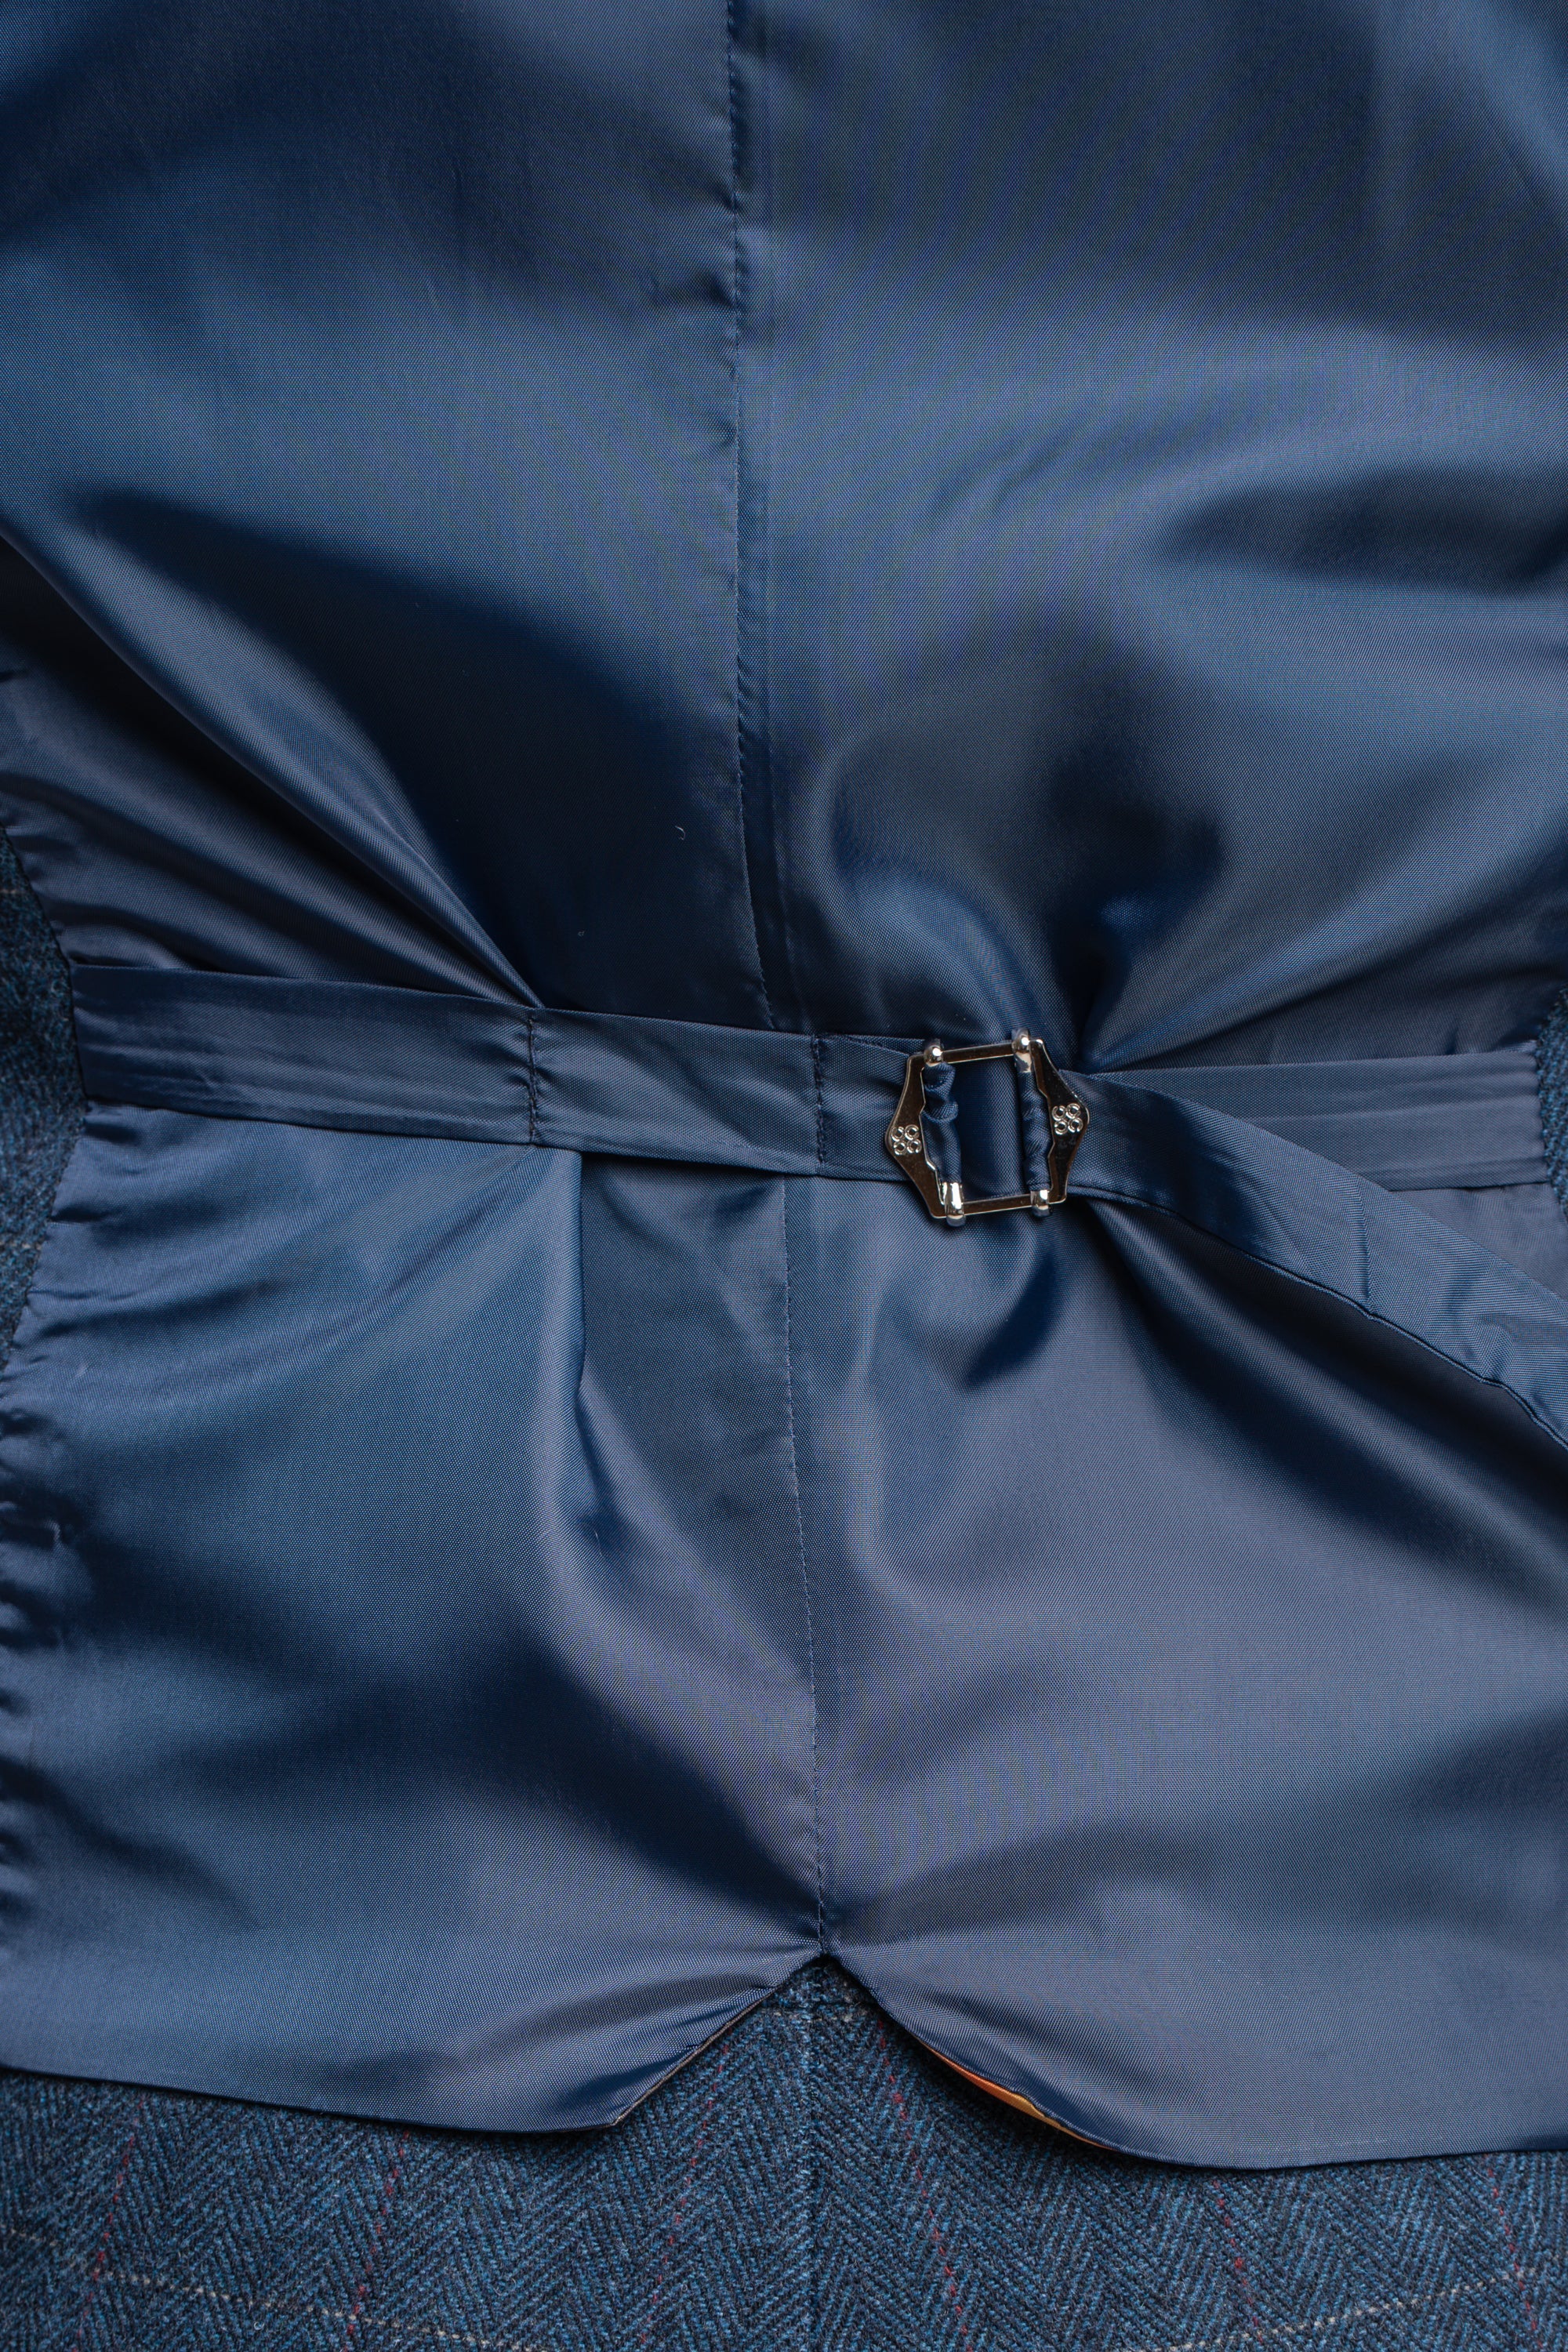 Costume tweed Carnegi trois pièces bleu marine style Peaky Blinders - Cavani